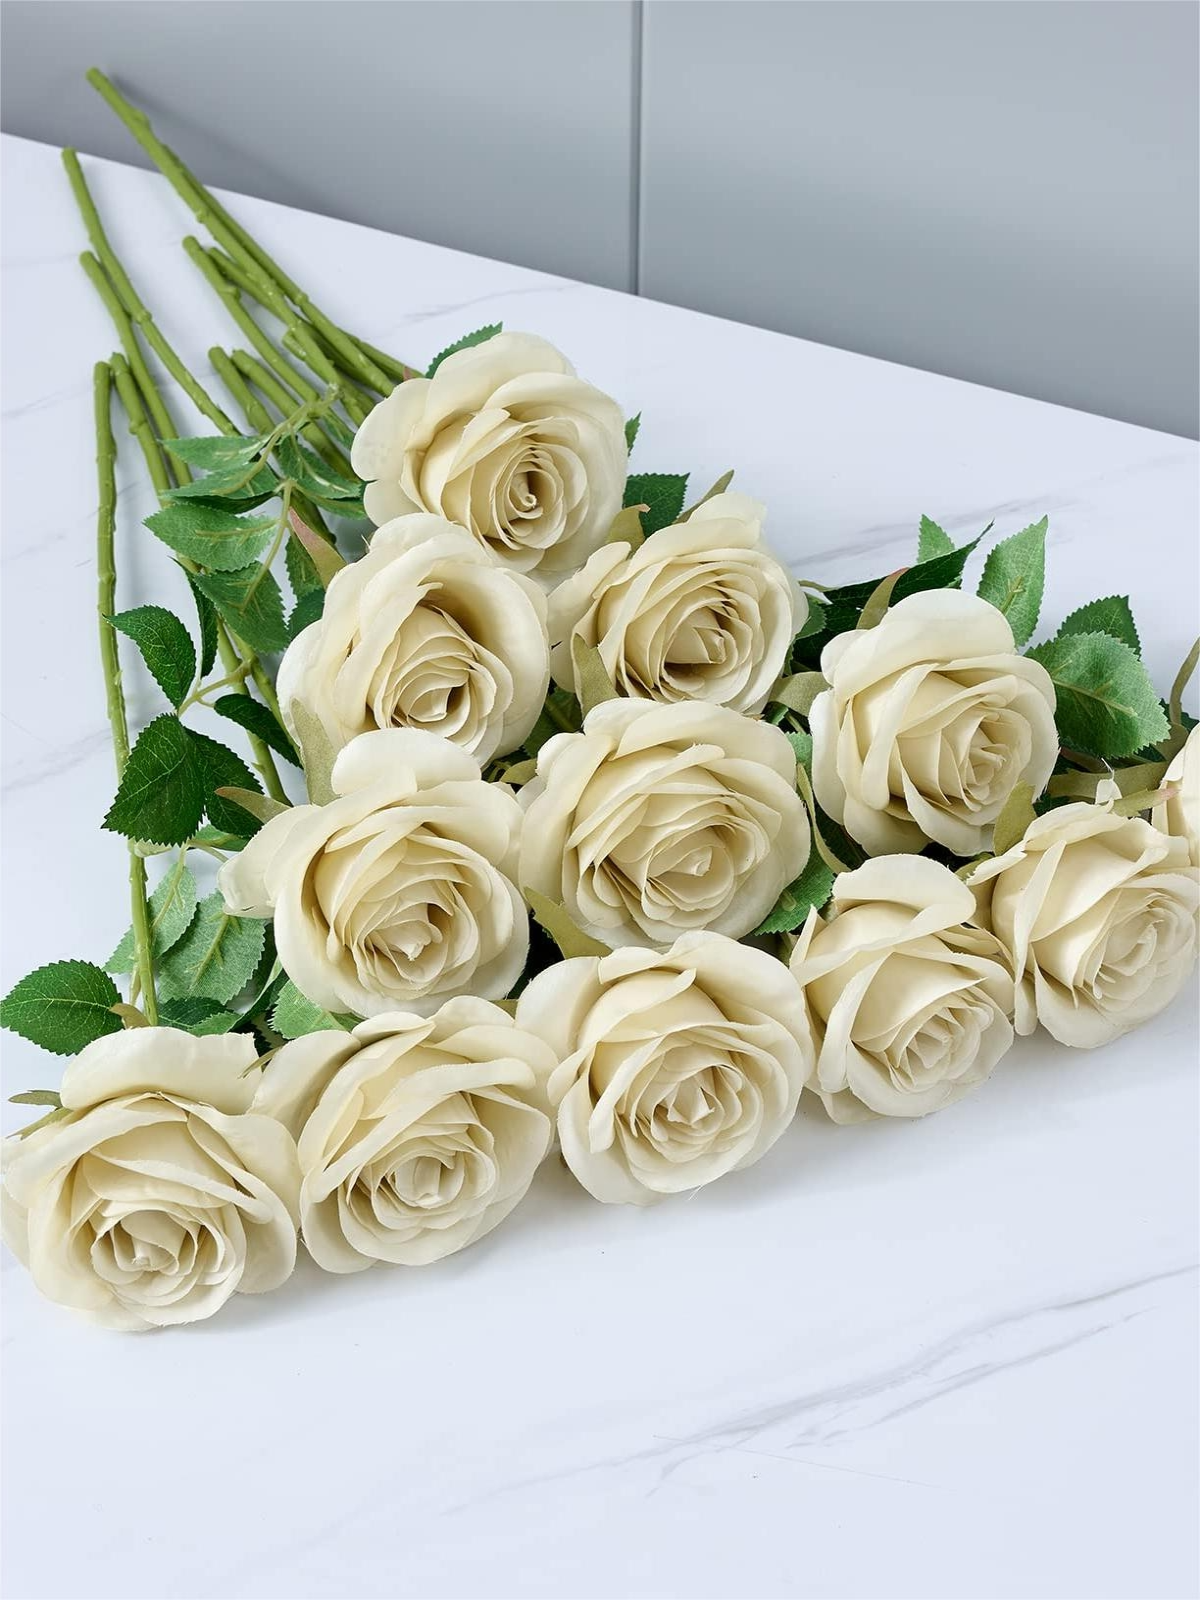 Beige Artificial Rose Flowers With Long Stems Wedding Bouquet Centerpieces Decorations HH8024